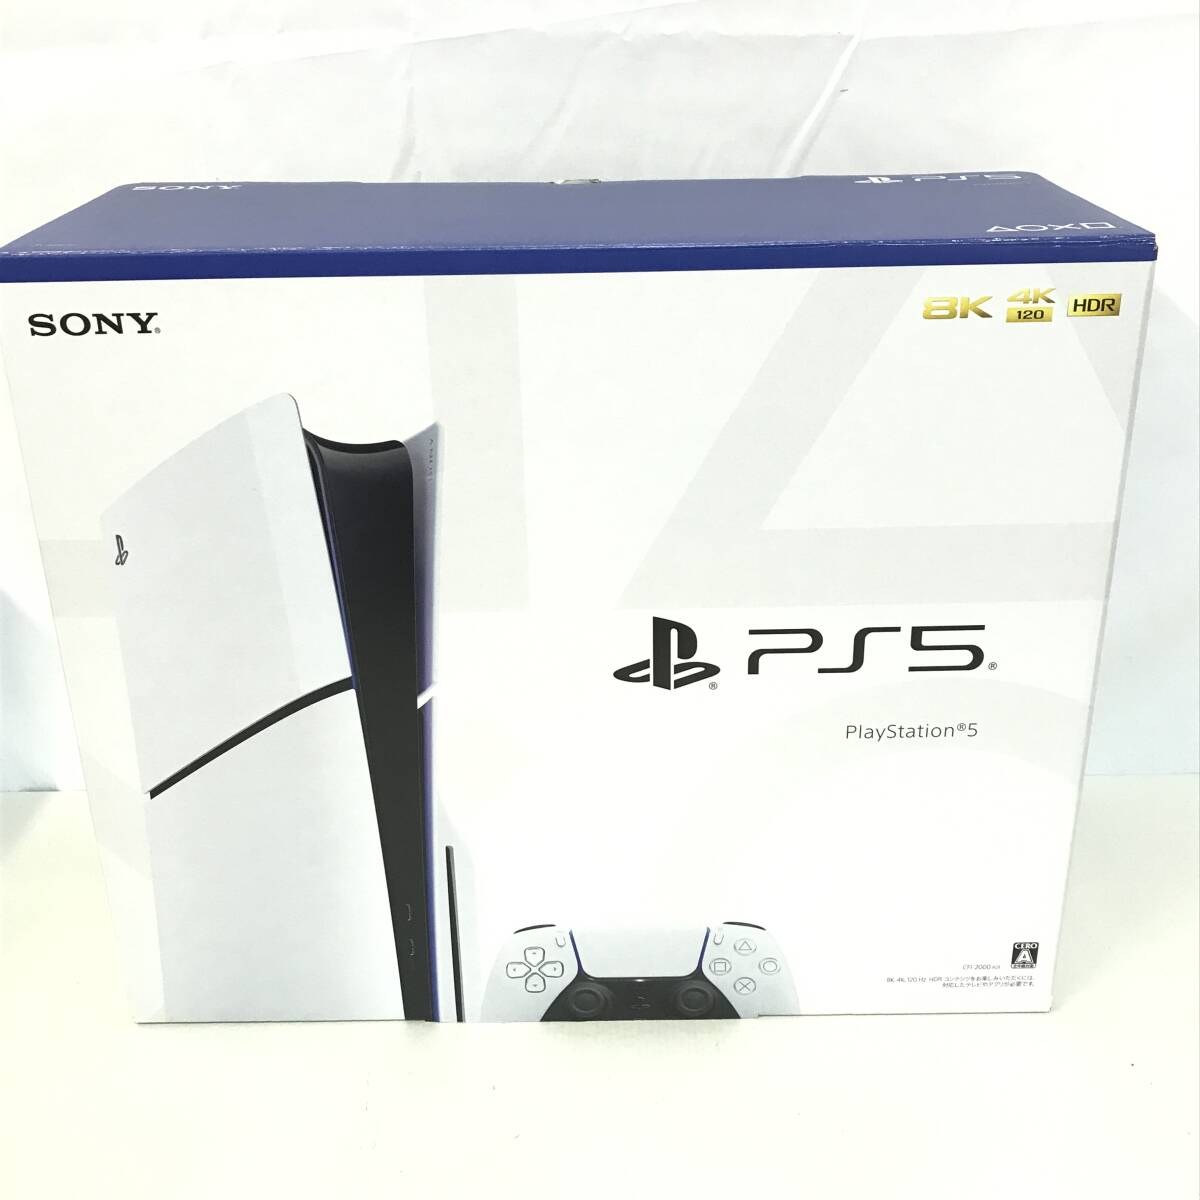 35　SONY Playstation5 PS5 CFI-2000 本体 中古品 (140) ①_画像1